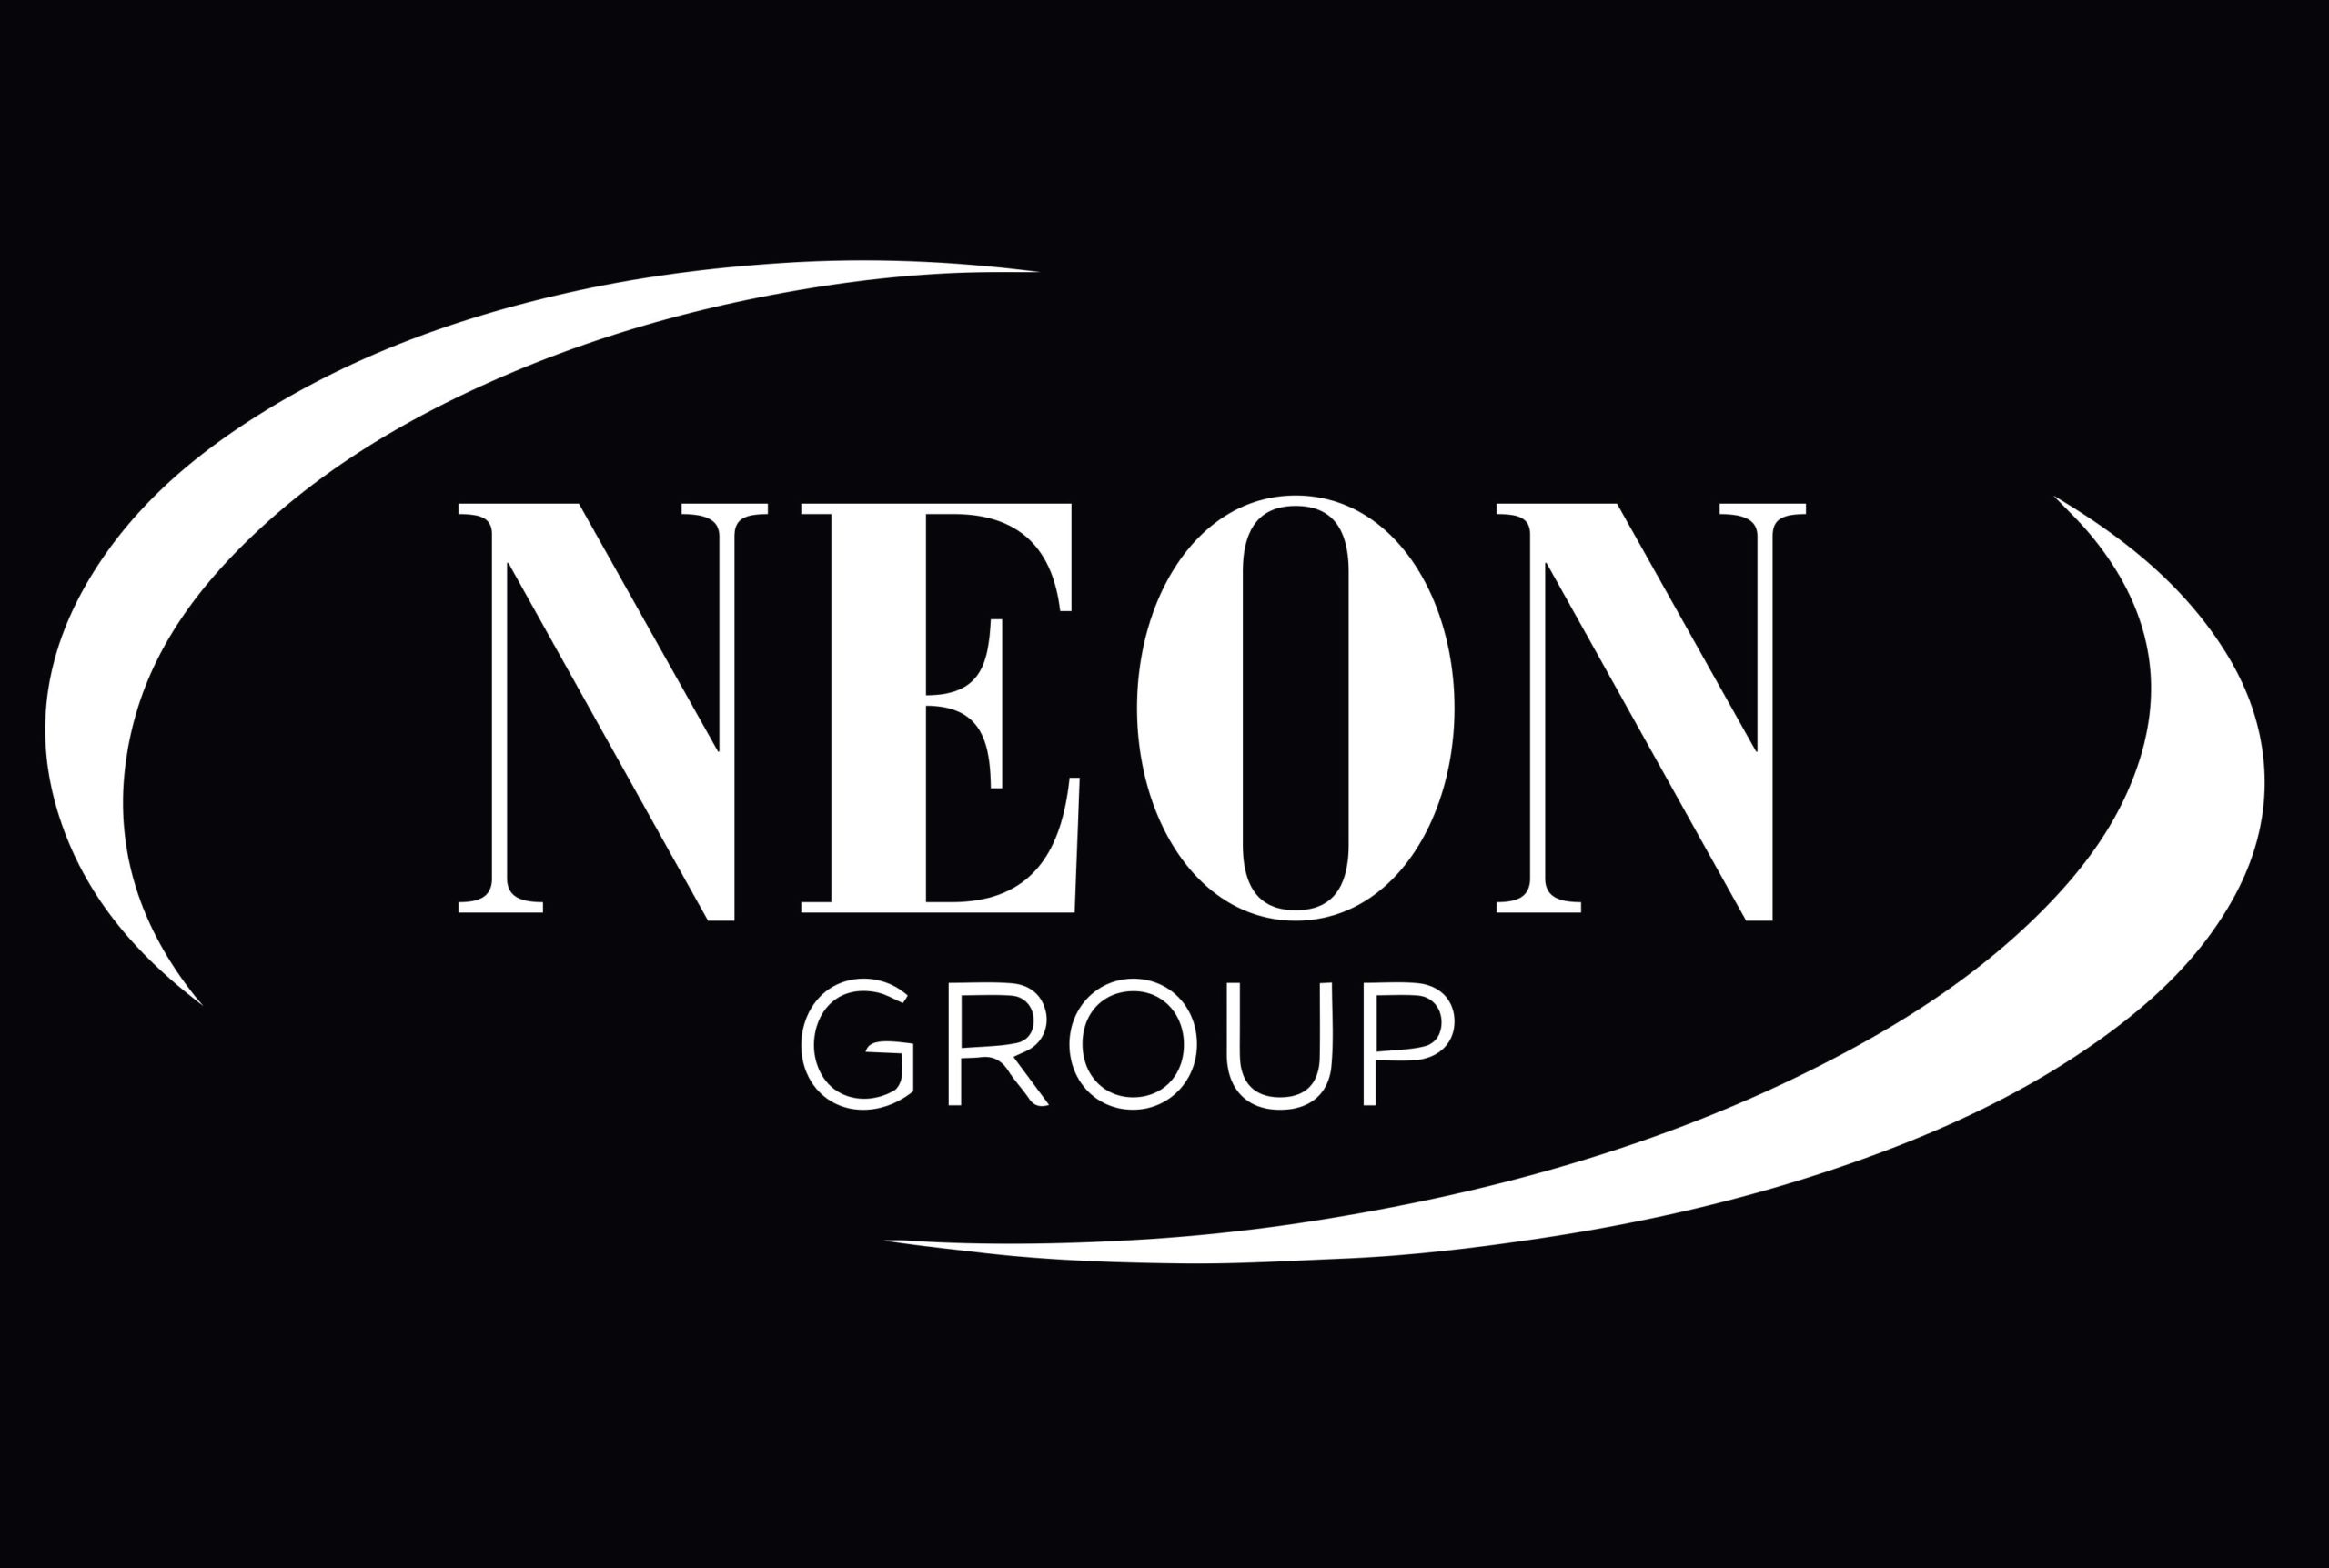 NEON-GROUP-Logo-Black-Copy-scaled.jpg